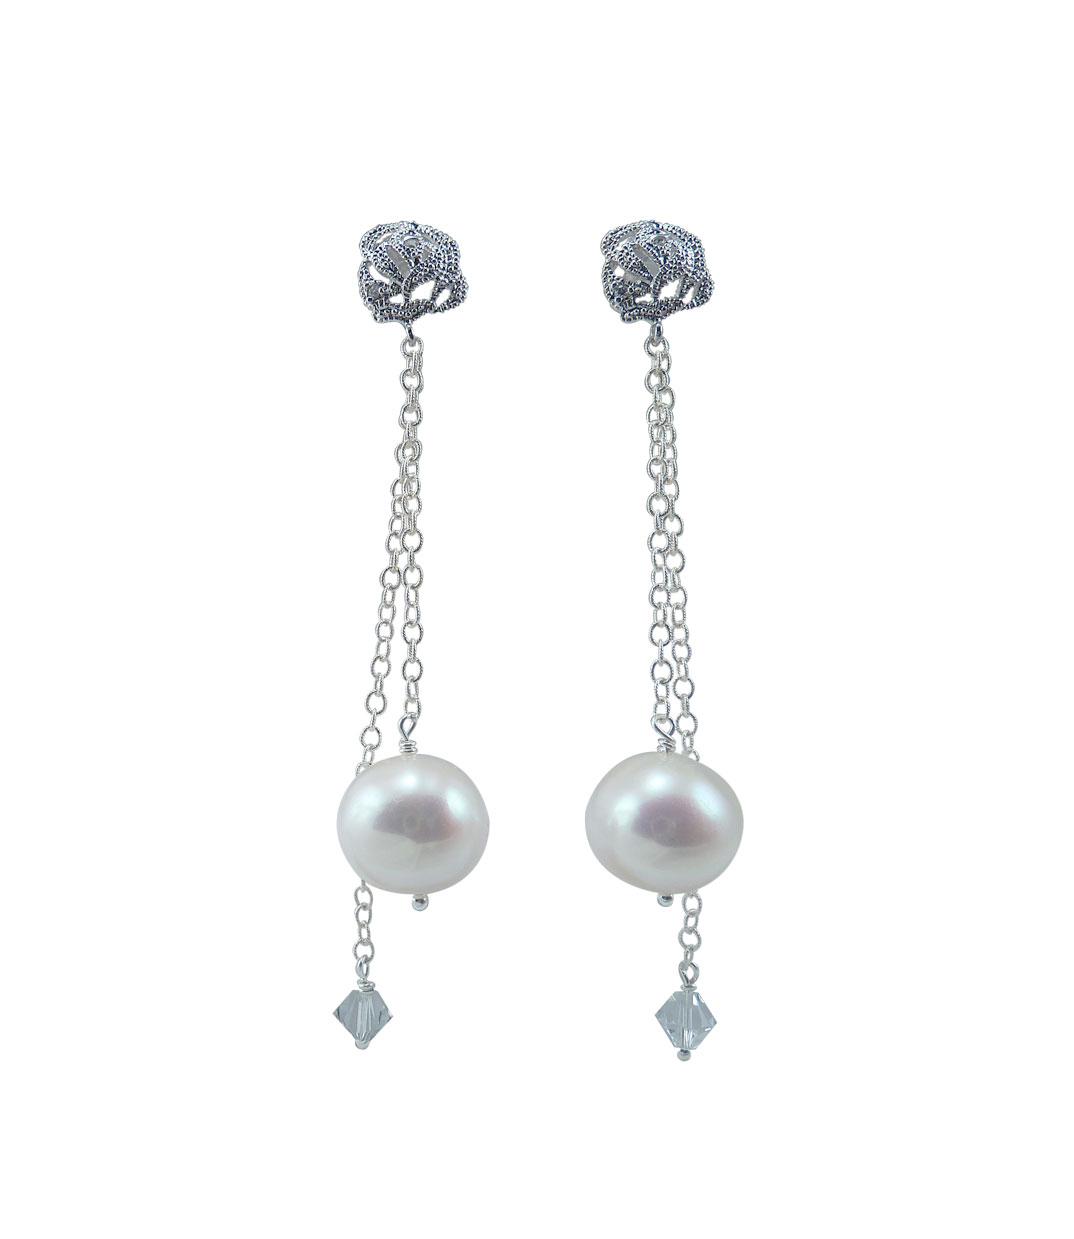 Dangling designer pearl earrings. White wedding pearl jewelry